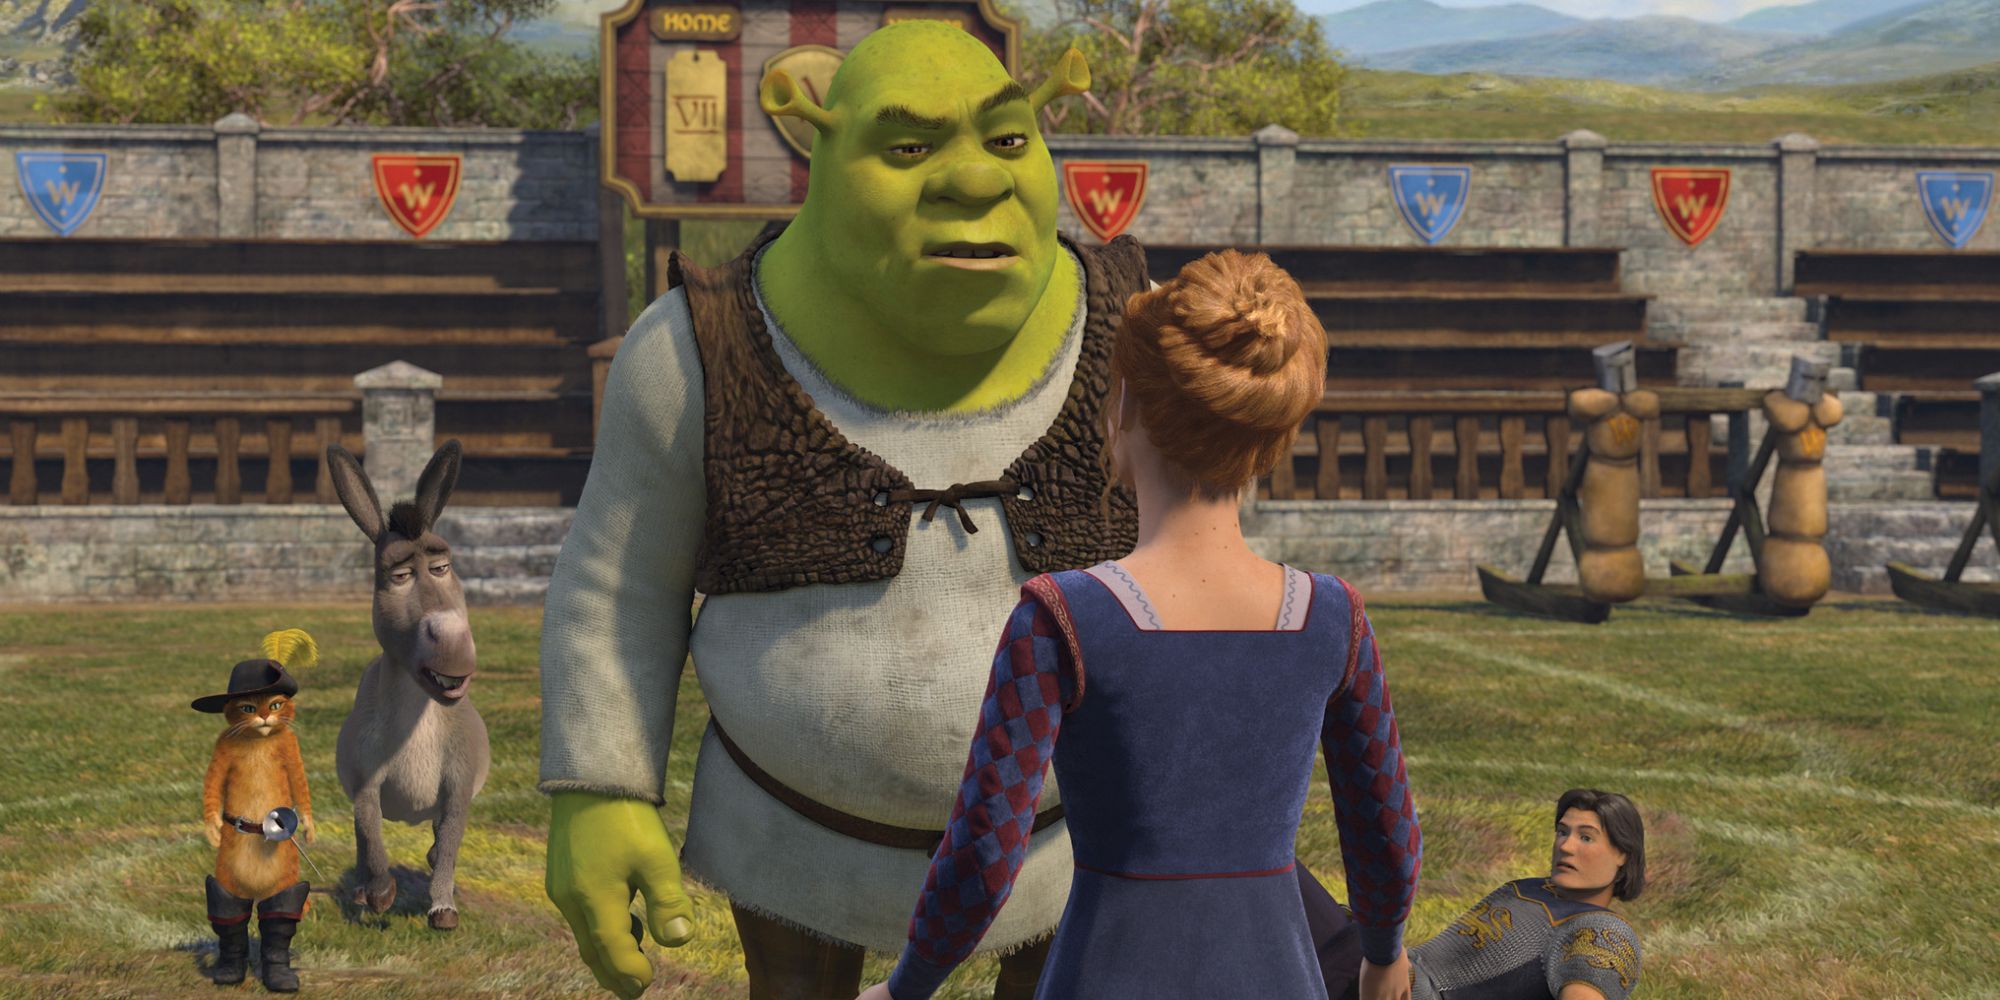 Shrek & Eddie Murphy's Most Popular Movies, Ranked According to Letterboxd